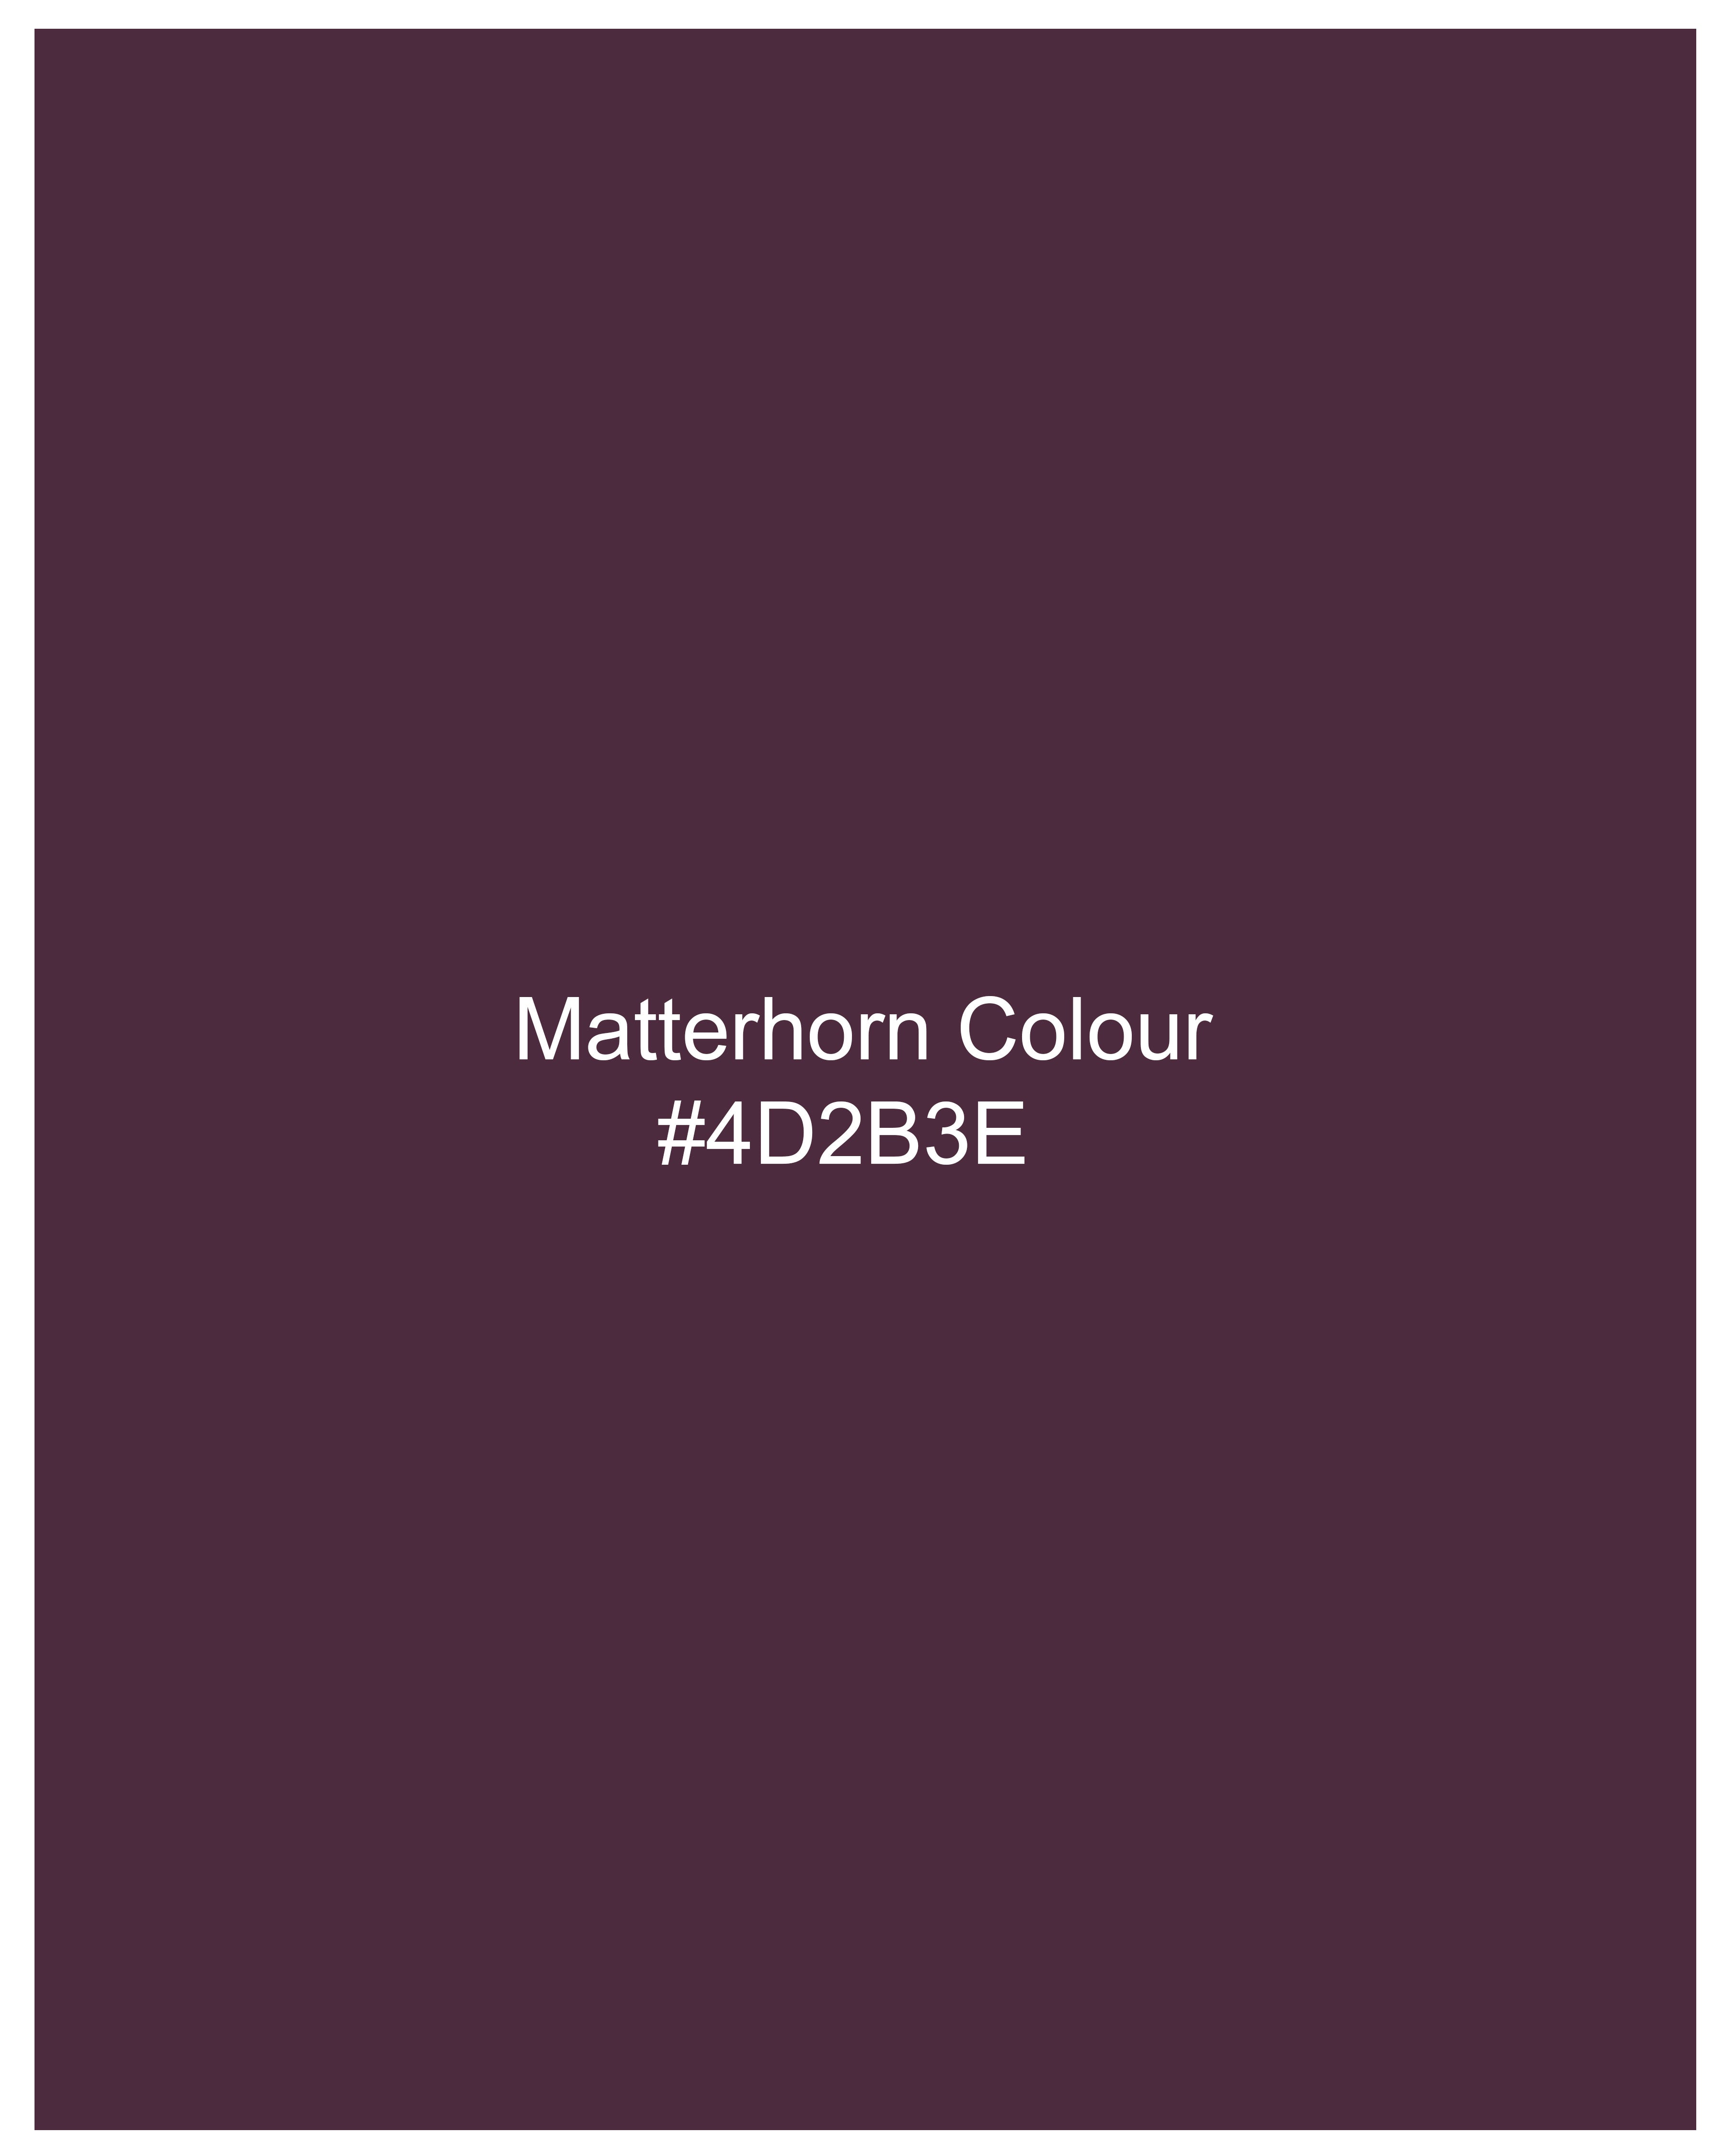 Matterhorn Maroon Dobby Textured Designer Shirt 9750-P387-38, 9750-P387-H-38, 9750-P387-39, 9750-P387-H-39, 9750-P387-40, 9750-P387-H-40, 9750-P387-42, 9750-P387-H-42, 9750-P387-44, 9750-P387-H-44, 9750-P387-46, 9750-P387-H-46, 9750-P387-48, 9750-P387-H-48, 9750-P387-50, 9750-P387-H-50, 9750-P387-52, 9750-P387-H-52